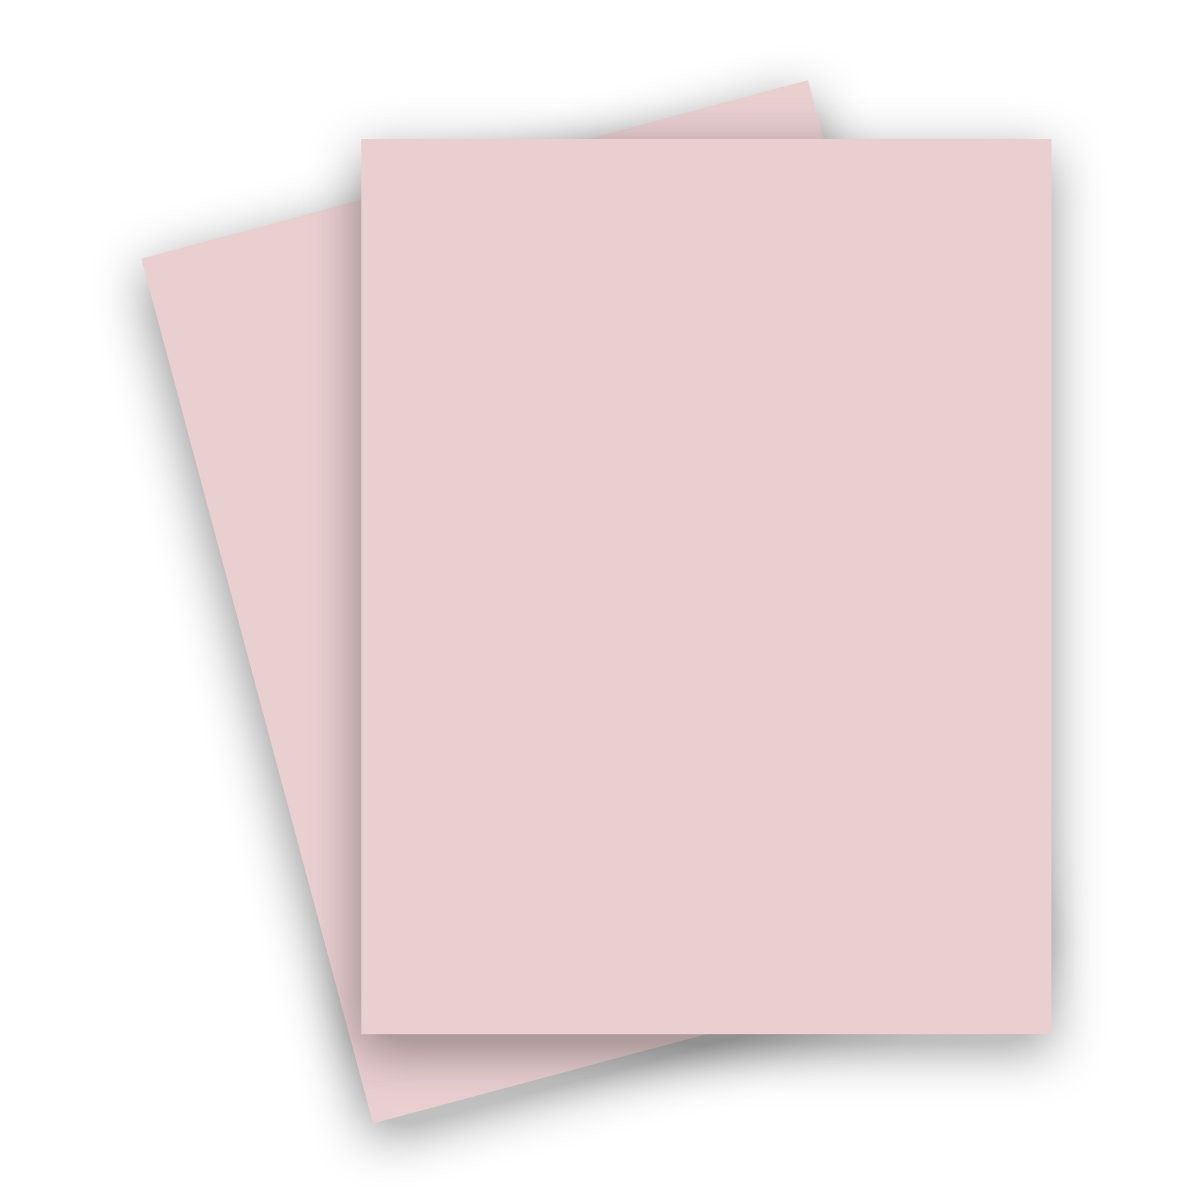 Burano Sky Blue (08) - 12X18 Cardstock Paper - 92Lb Cover (250Gsm) - 100 Pk